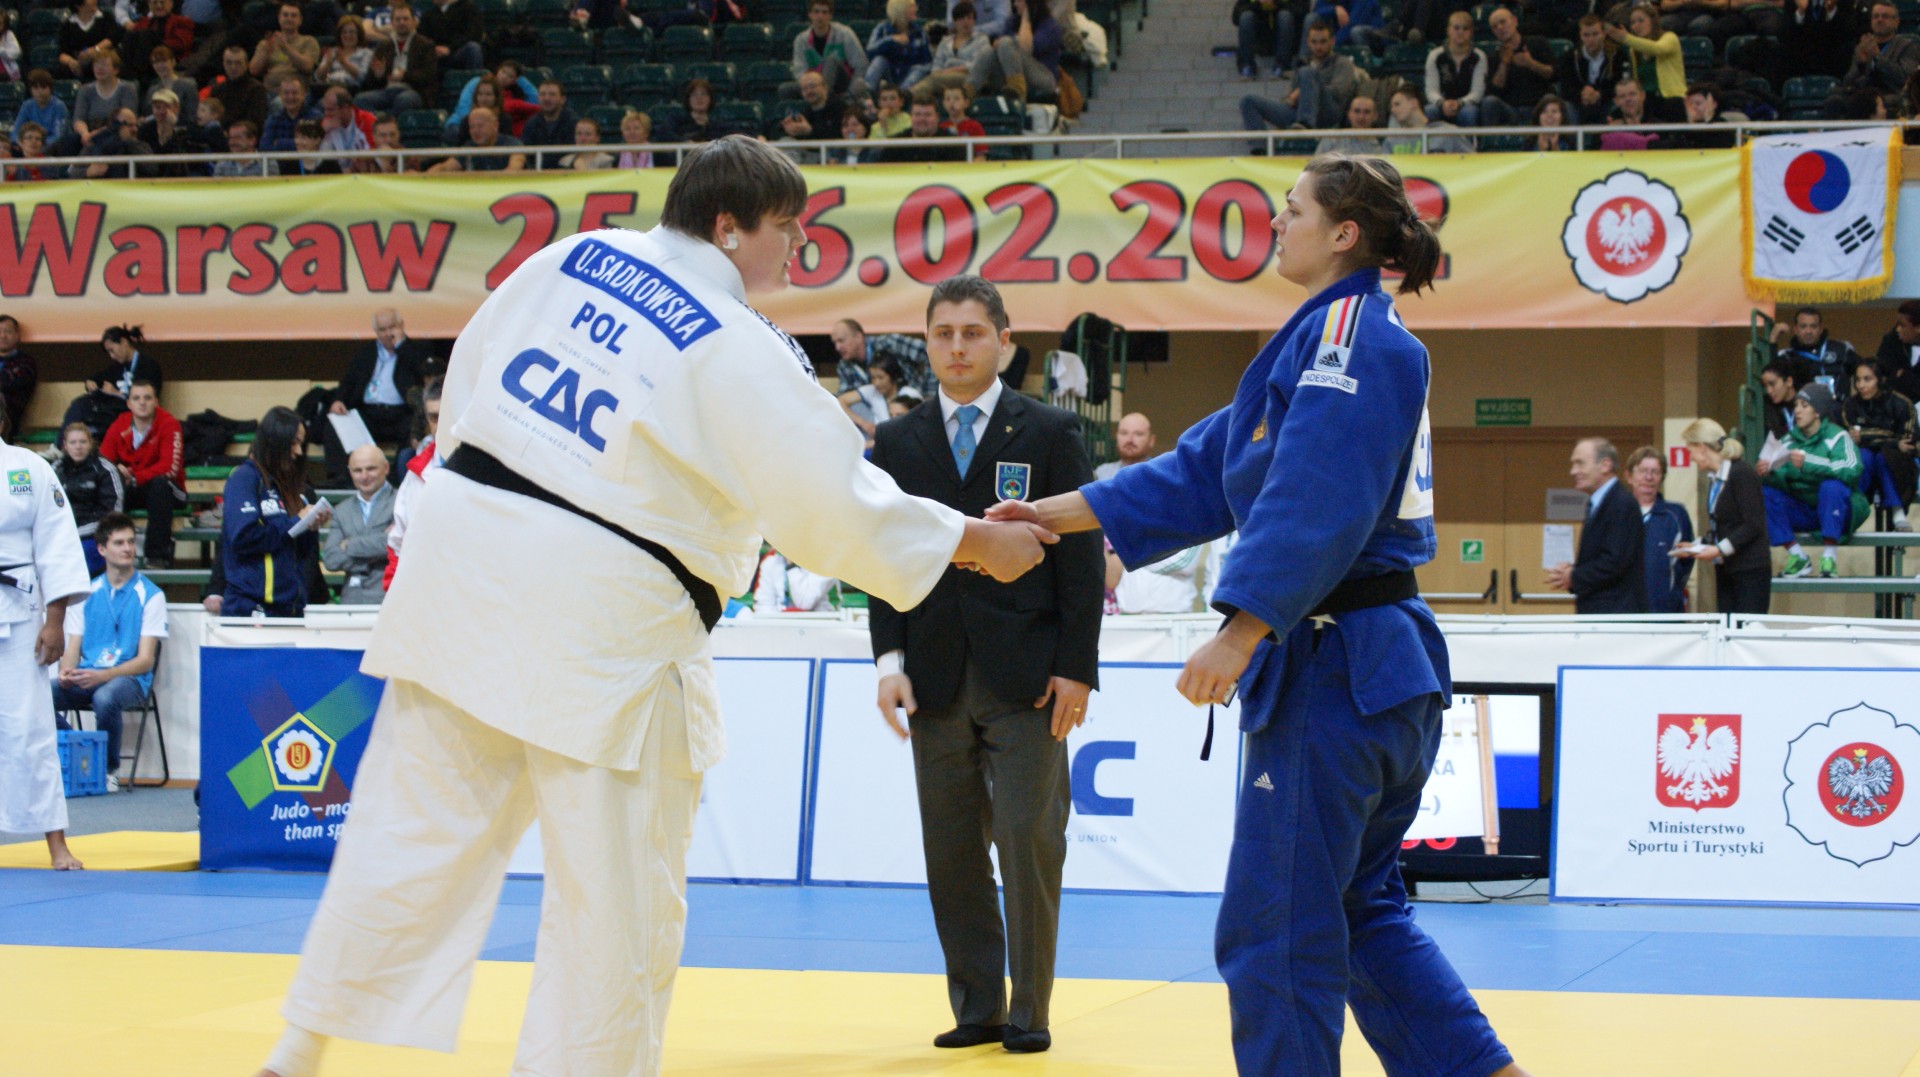 Puchar Swiata Judo Warszawa 2012 (354).JPG